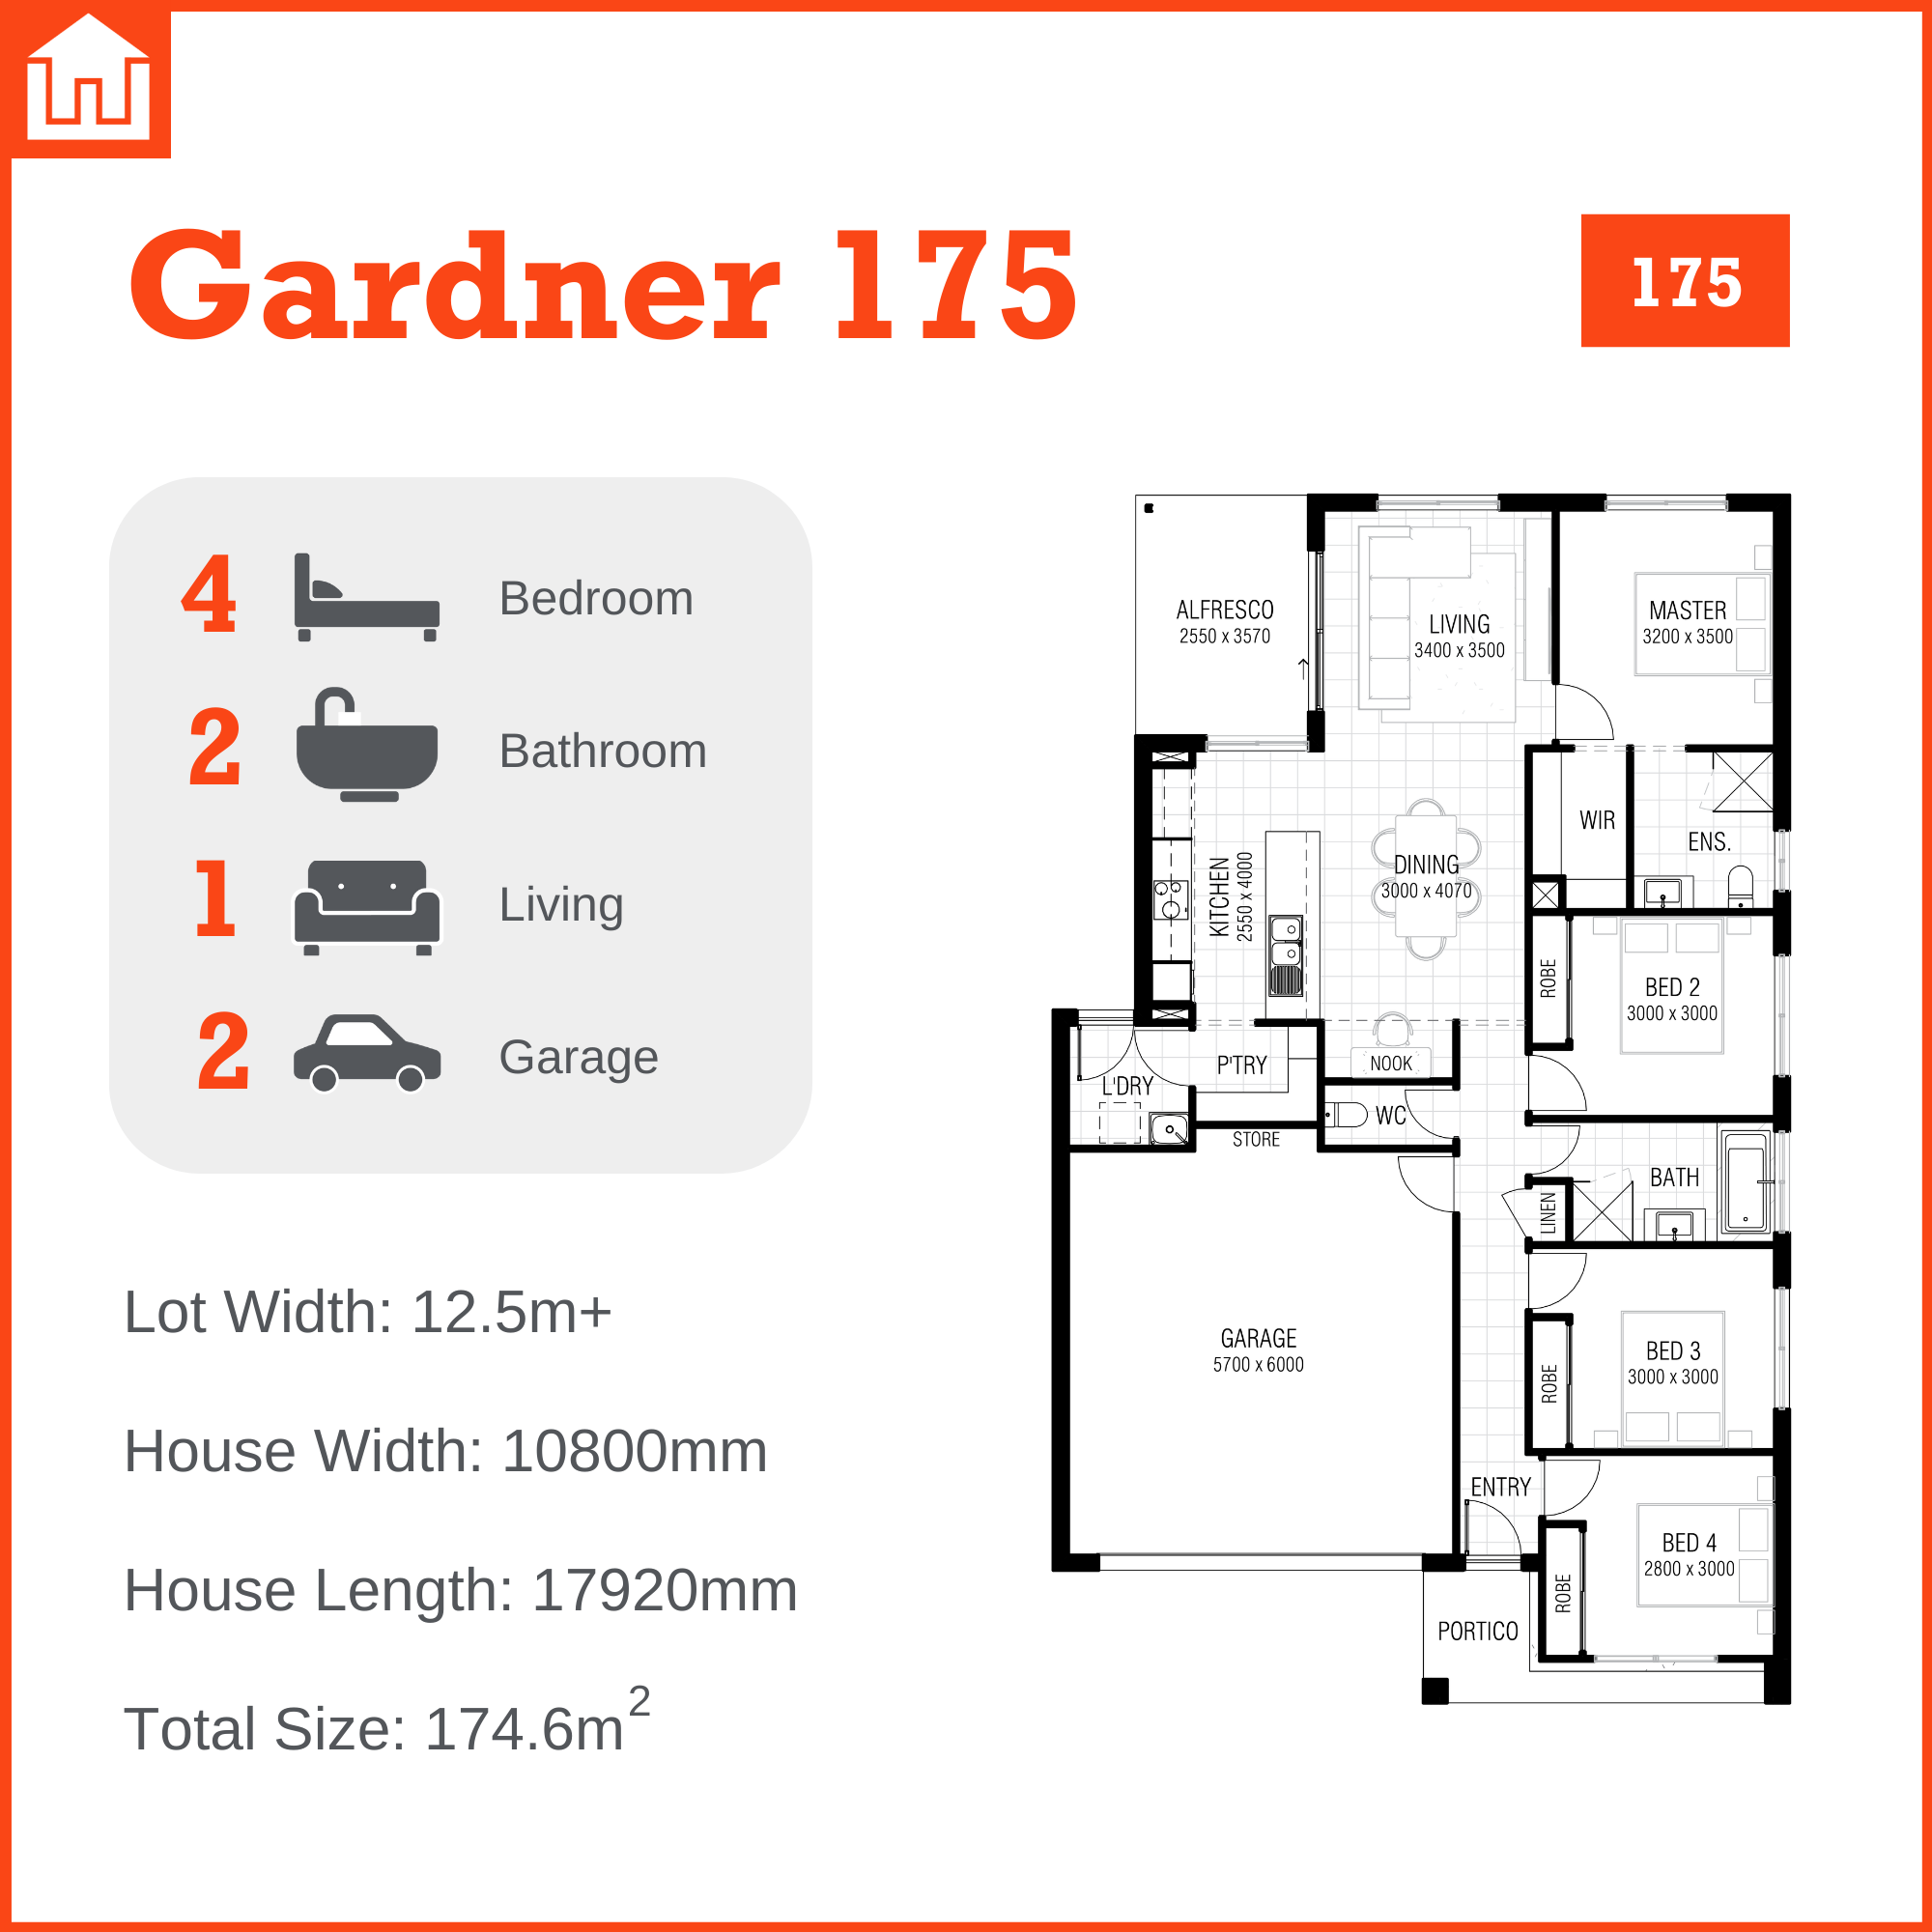 Gardner 175 Home Design - Expression by DC Living 